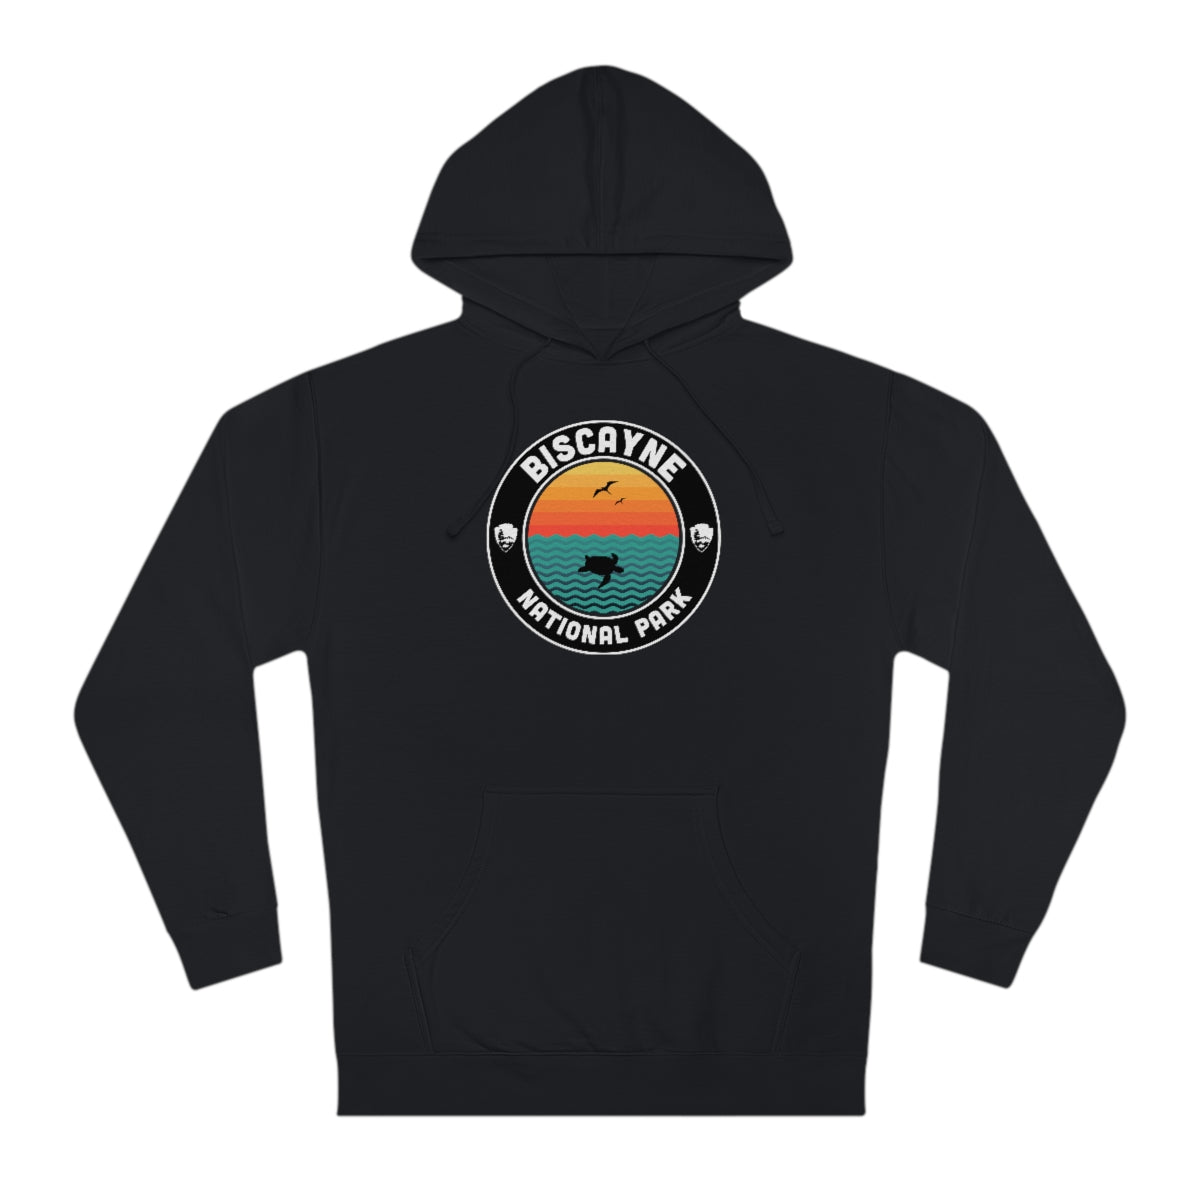 Biscayne National Park Hoodie - Round Emblem Design